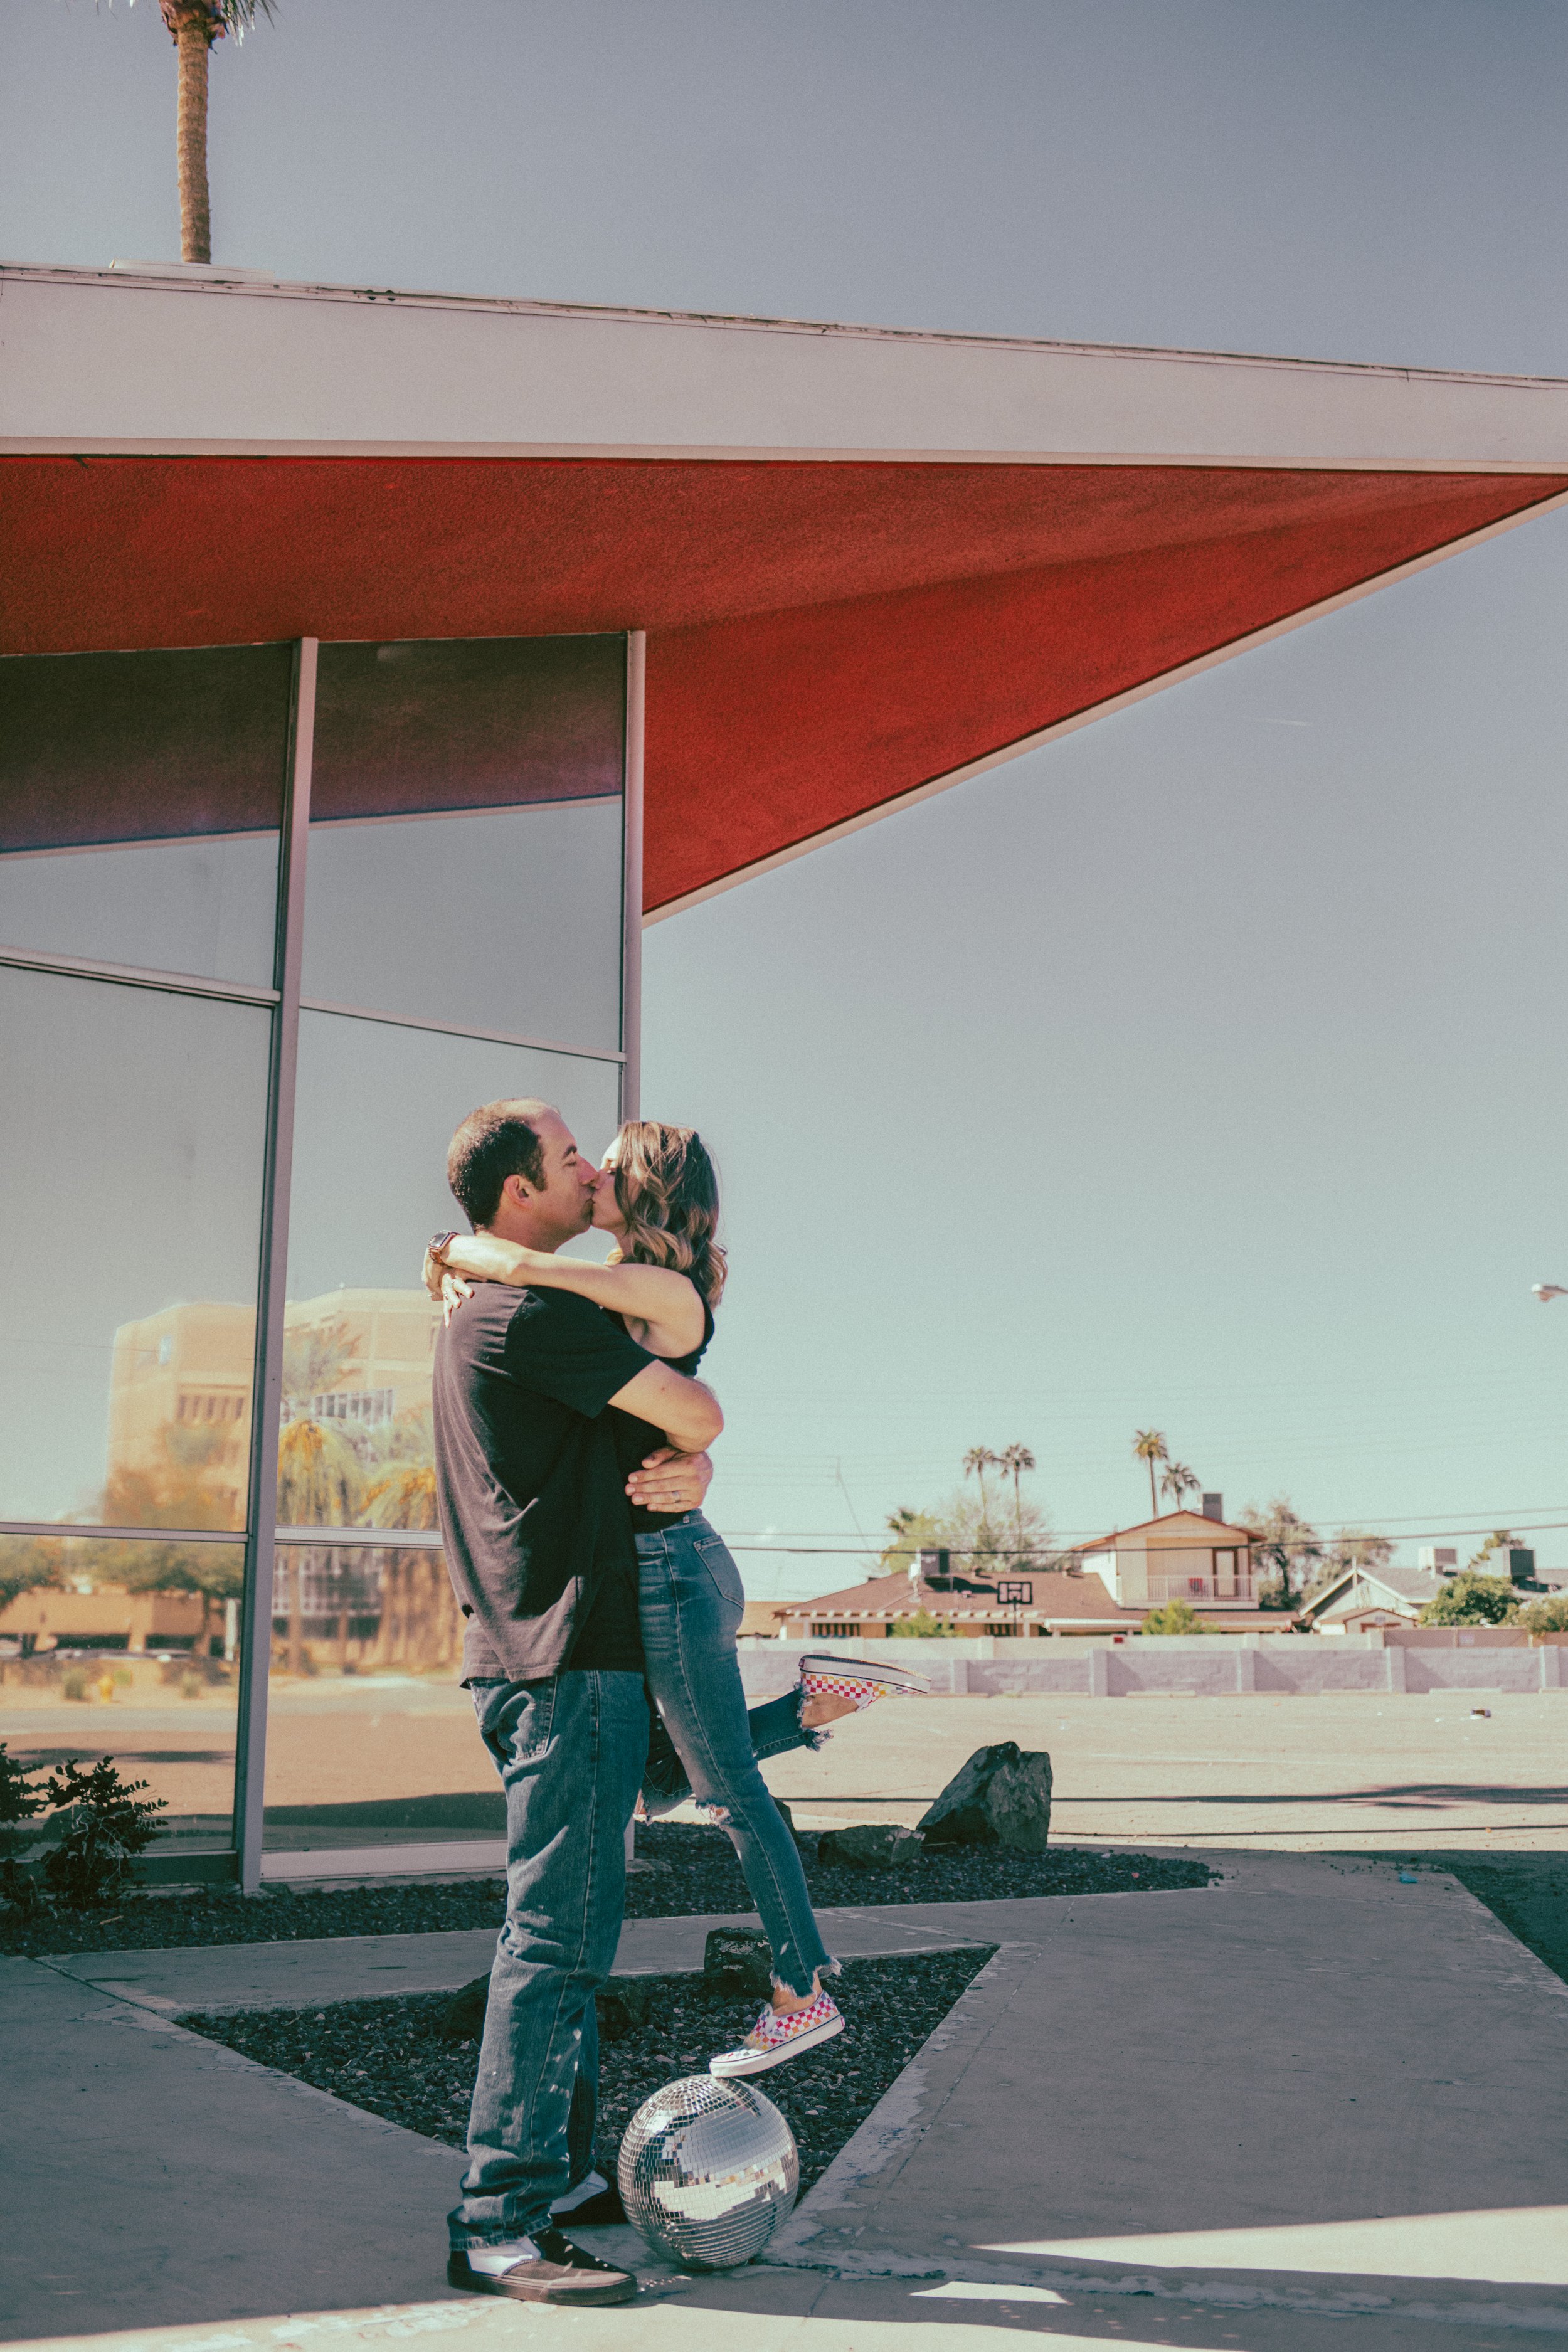 Couple poses for their retro bike and skateboard photoshoot at Bowlero in Phoenix, Arizona by creative family photographer; Jennifer Lind Schutsky.